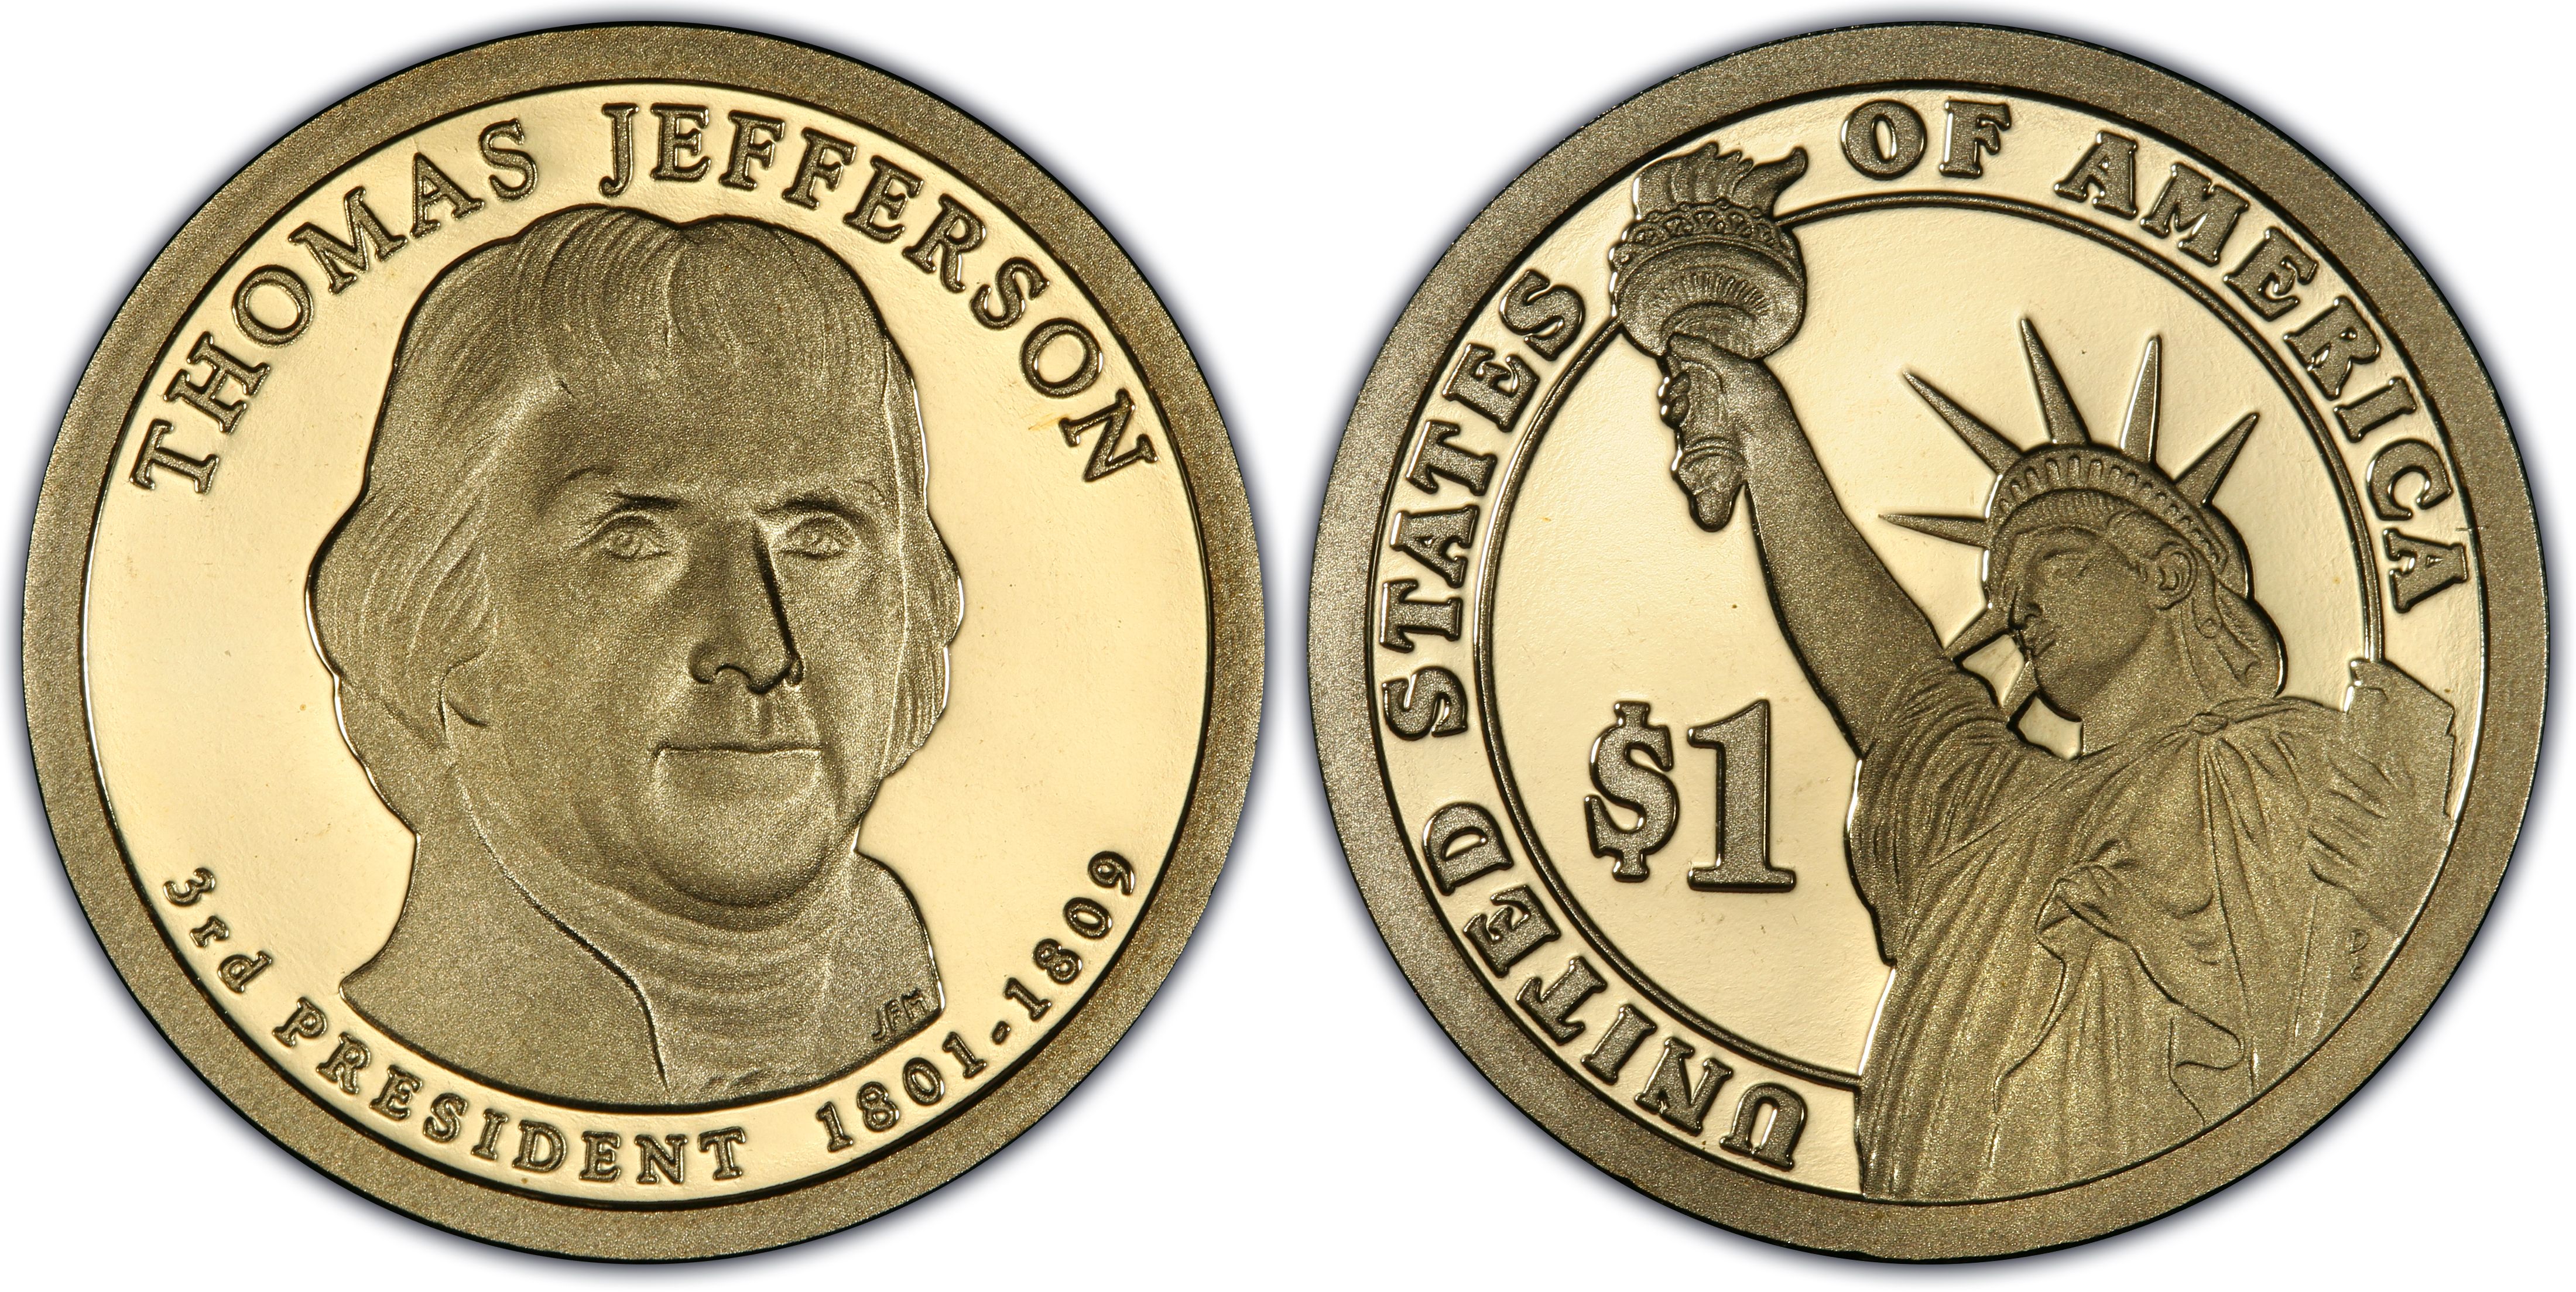 12 PRESIDENTIAL PROOF DOLLARS WASHINGTON ADAMS JEFFERSON US COIN 2007S-08S-09S 